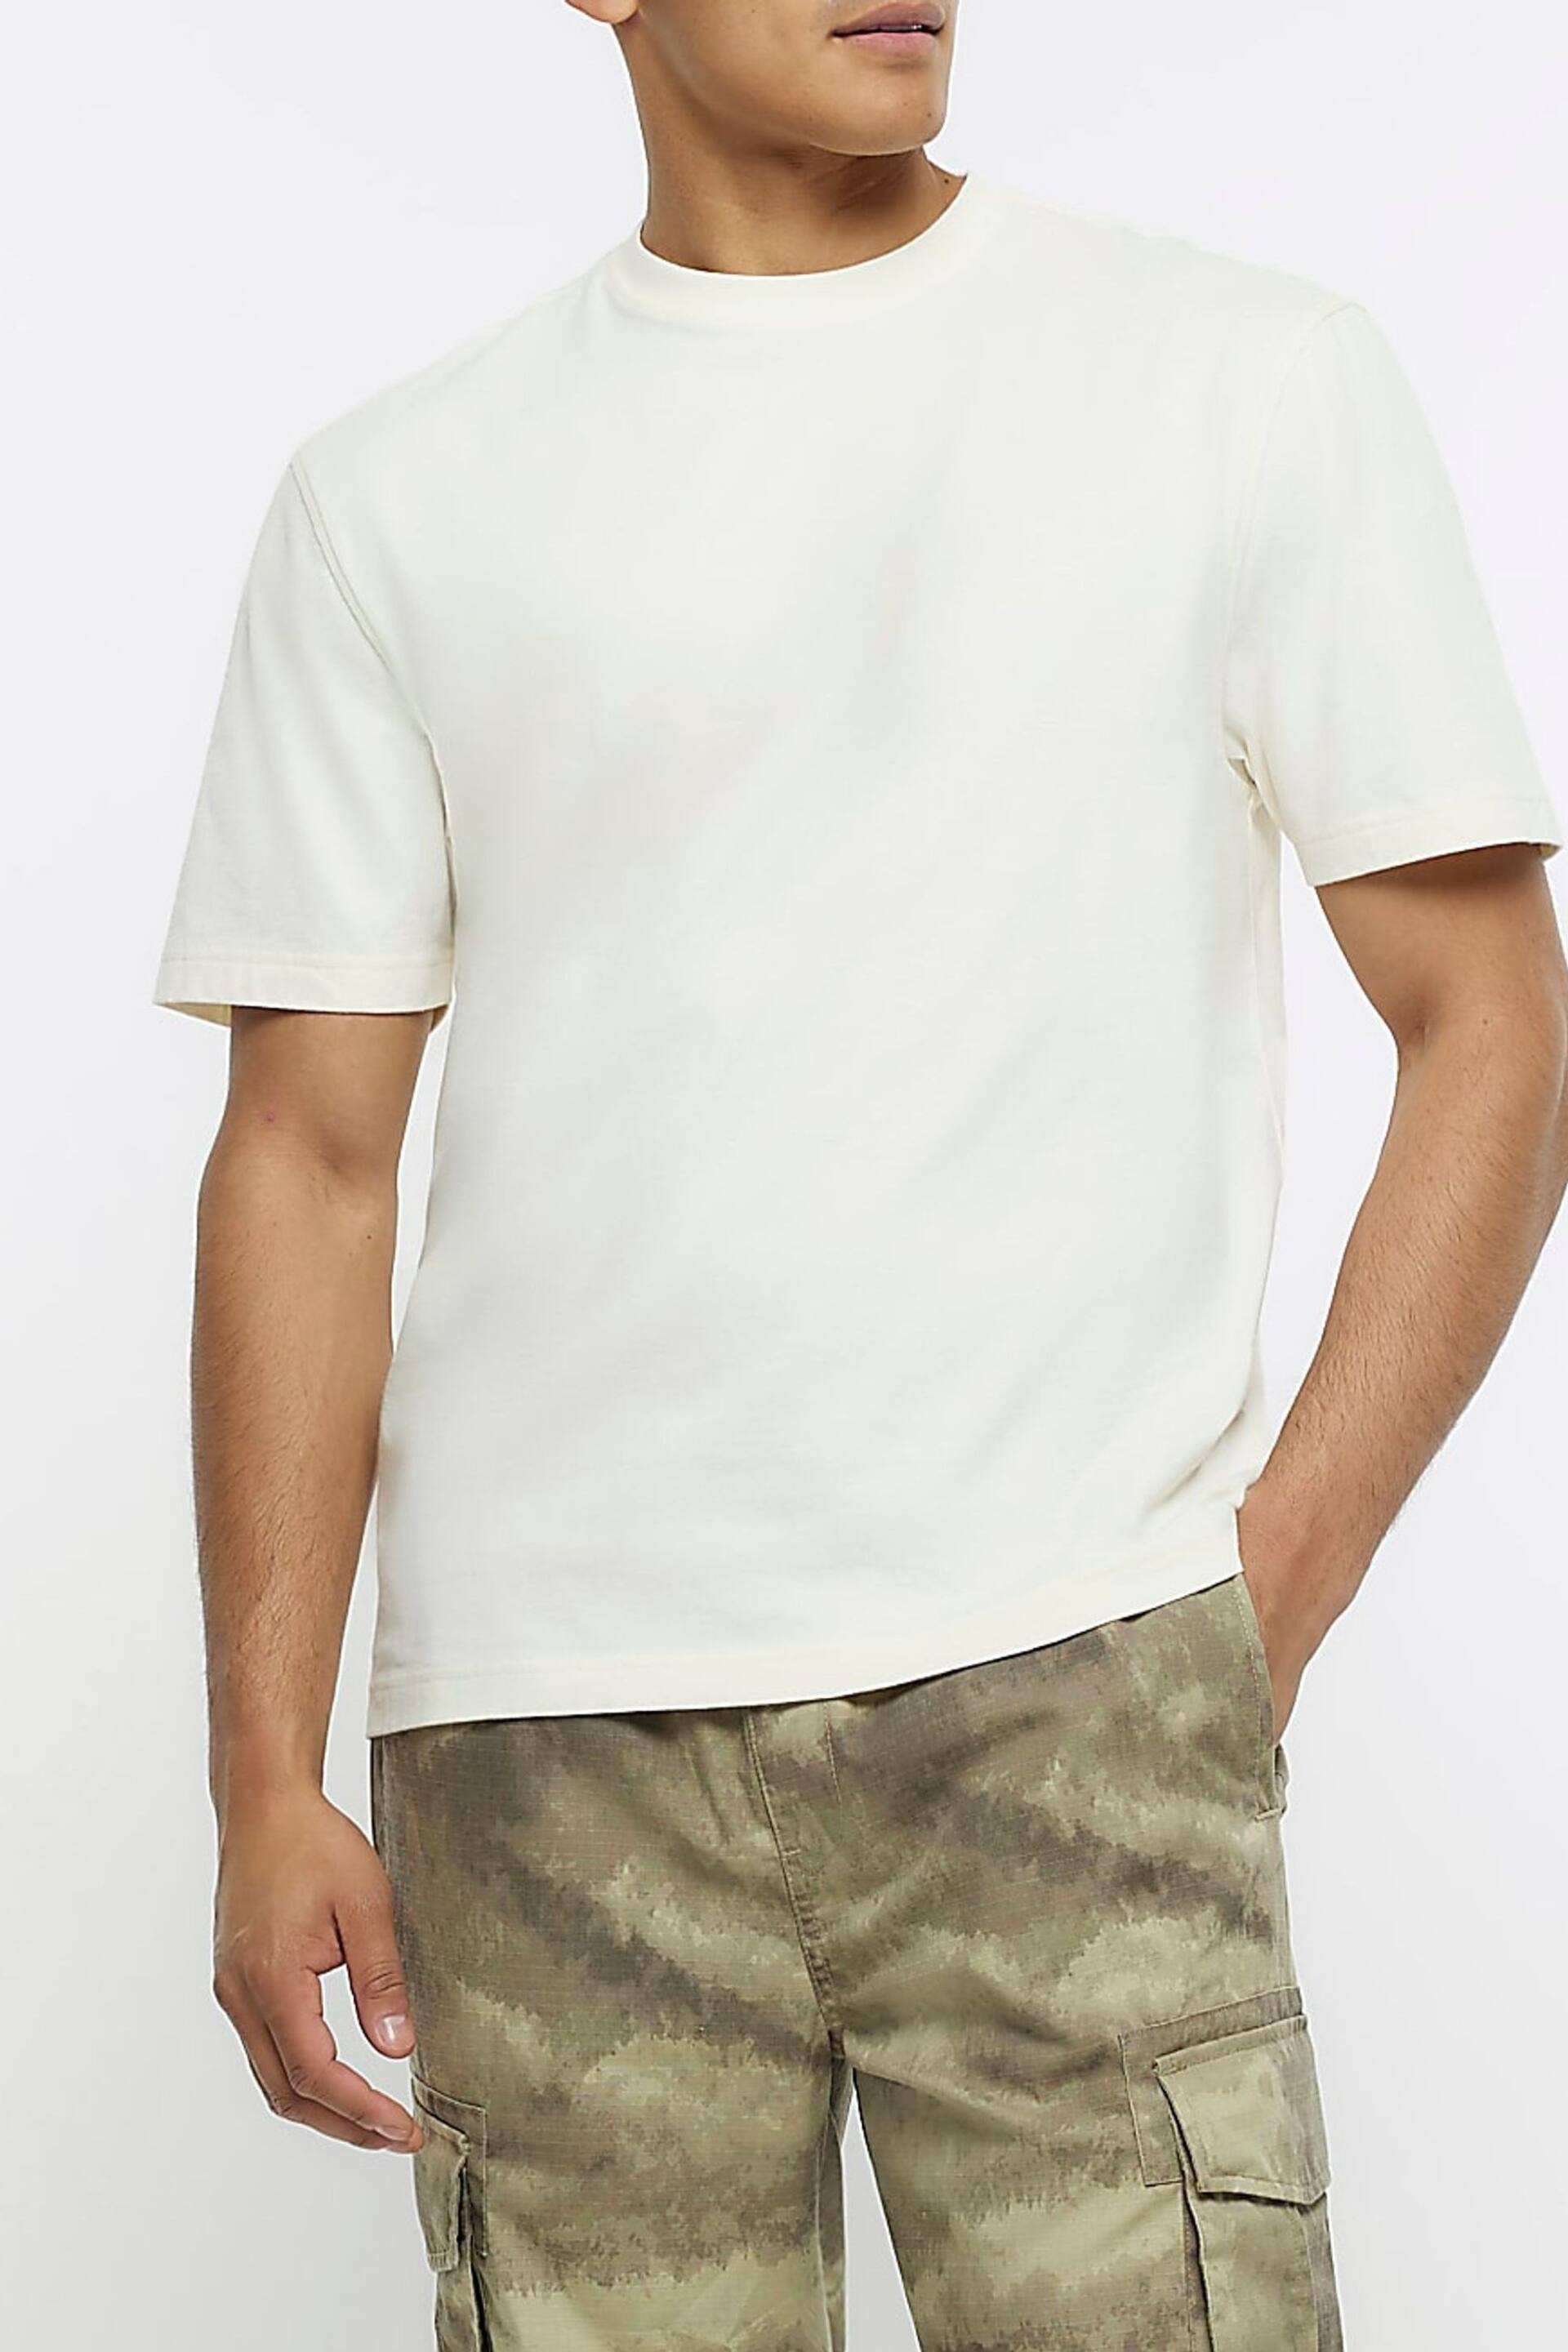 River Island White Chrome Regular Fit T-Shirt - Image 1 of 4